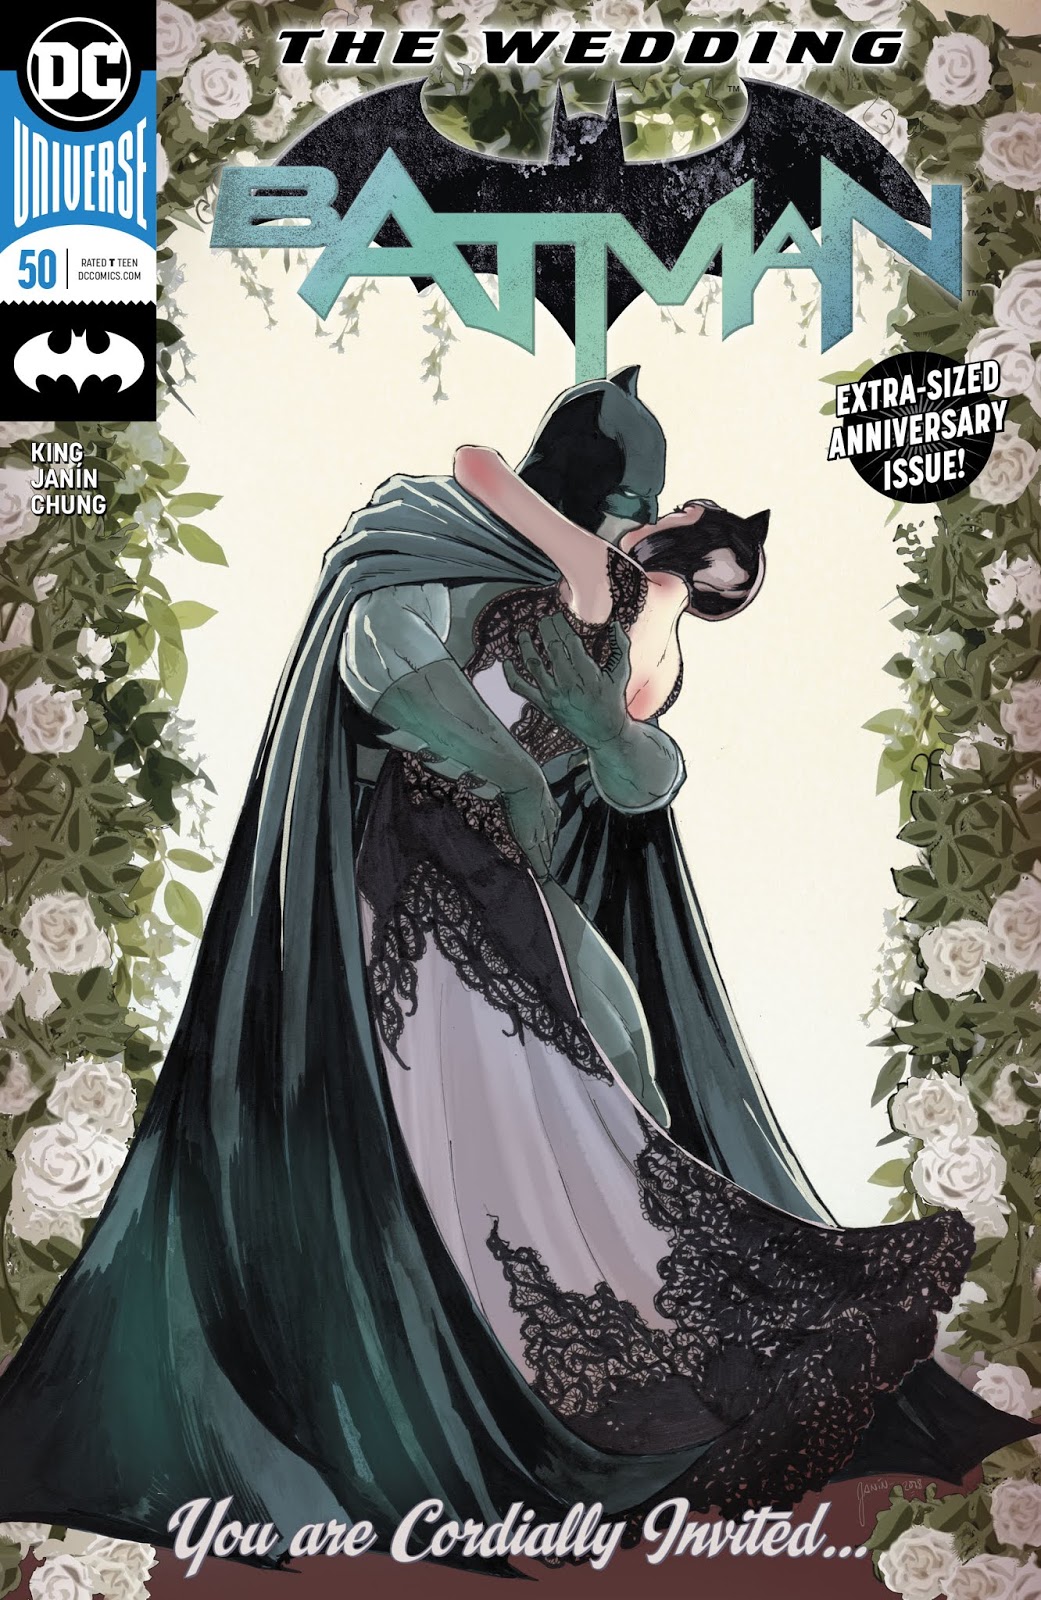 Batman Issue 50 DC Comics Catwoman wedding